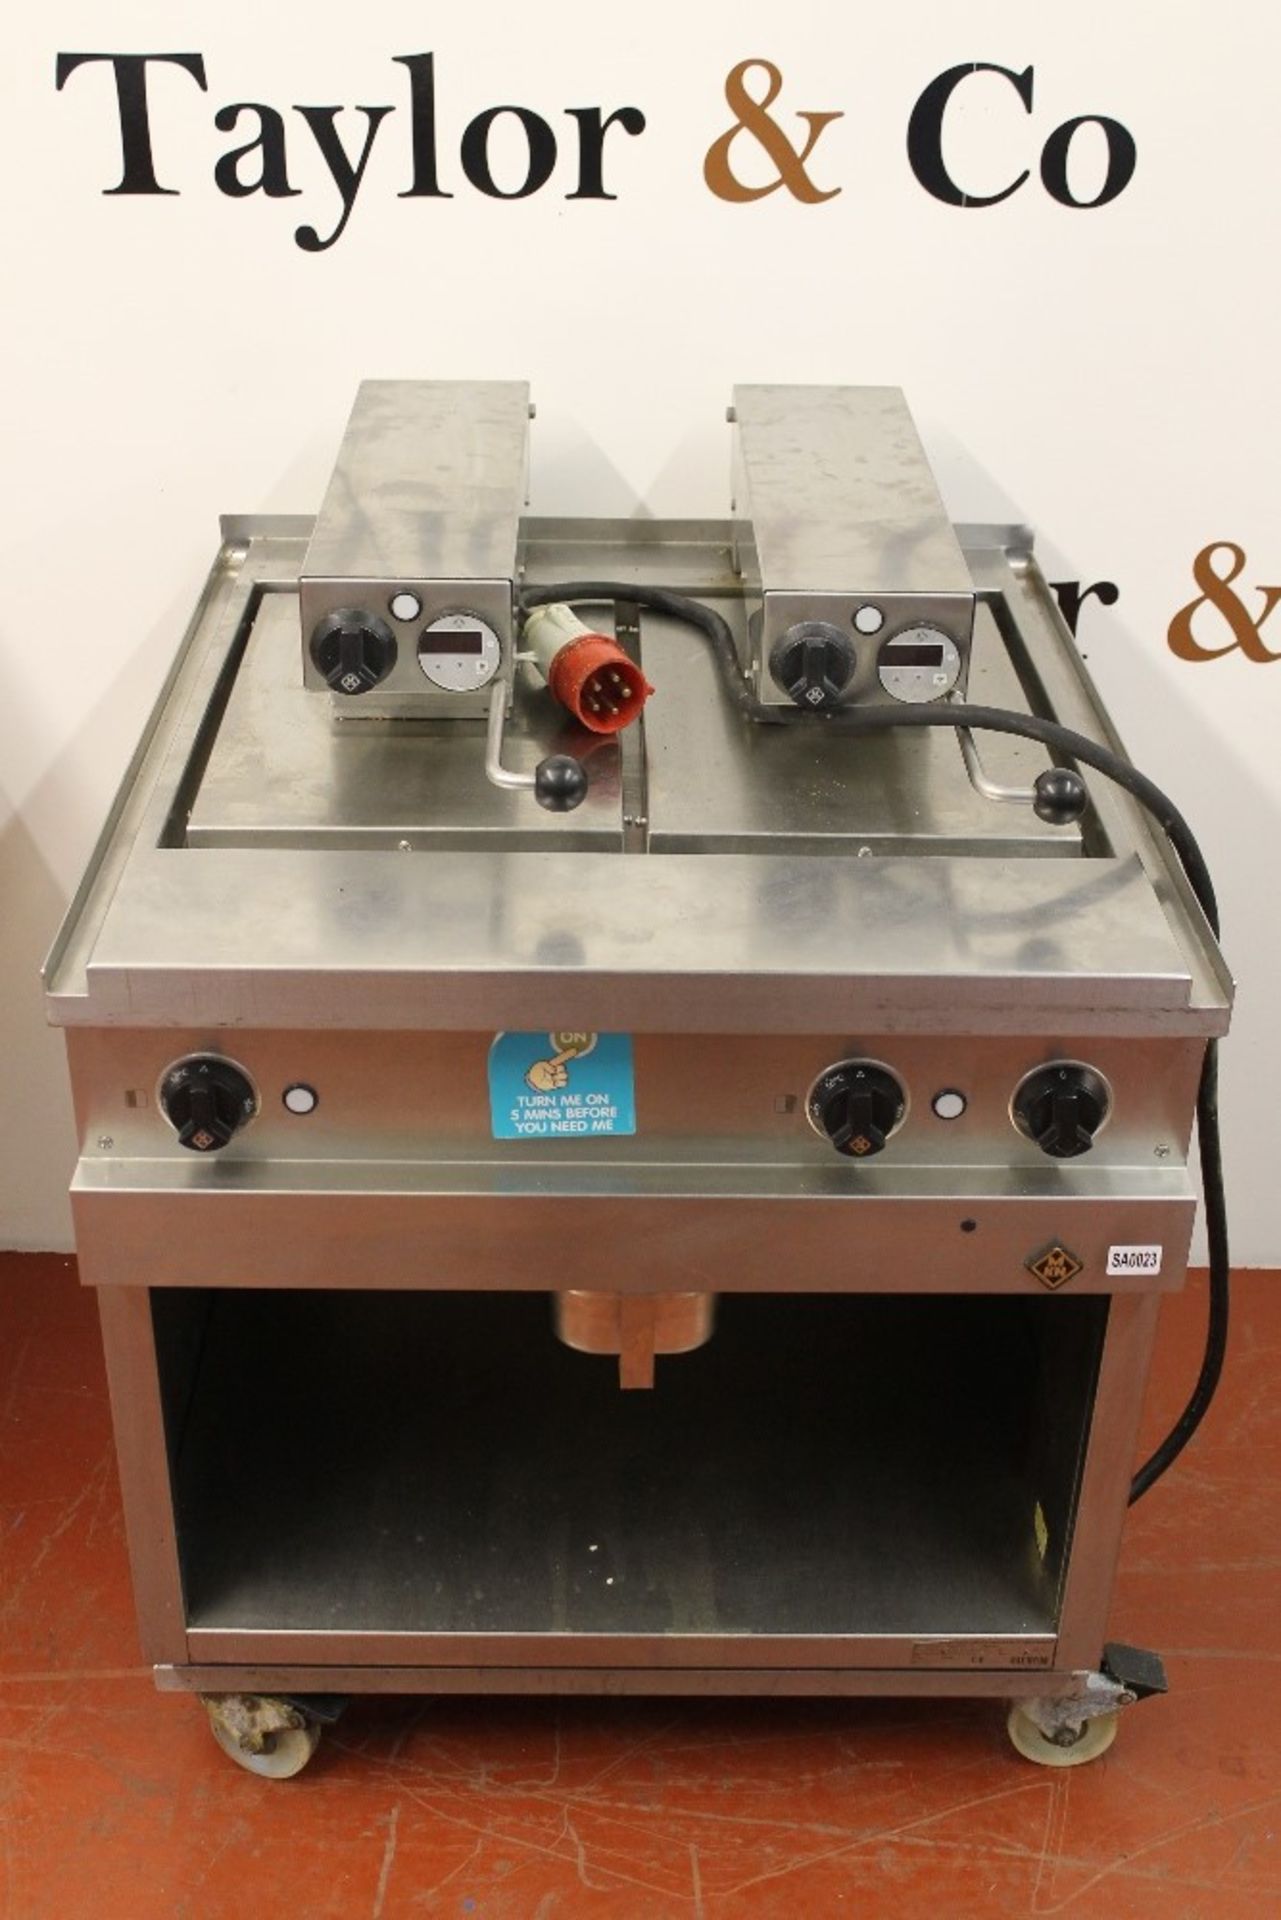 Large Griddle / Hot Plate with 2 x Pressure Plates Model 005601 – 1 support leg missing -NO VAT